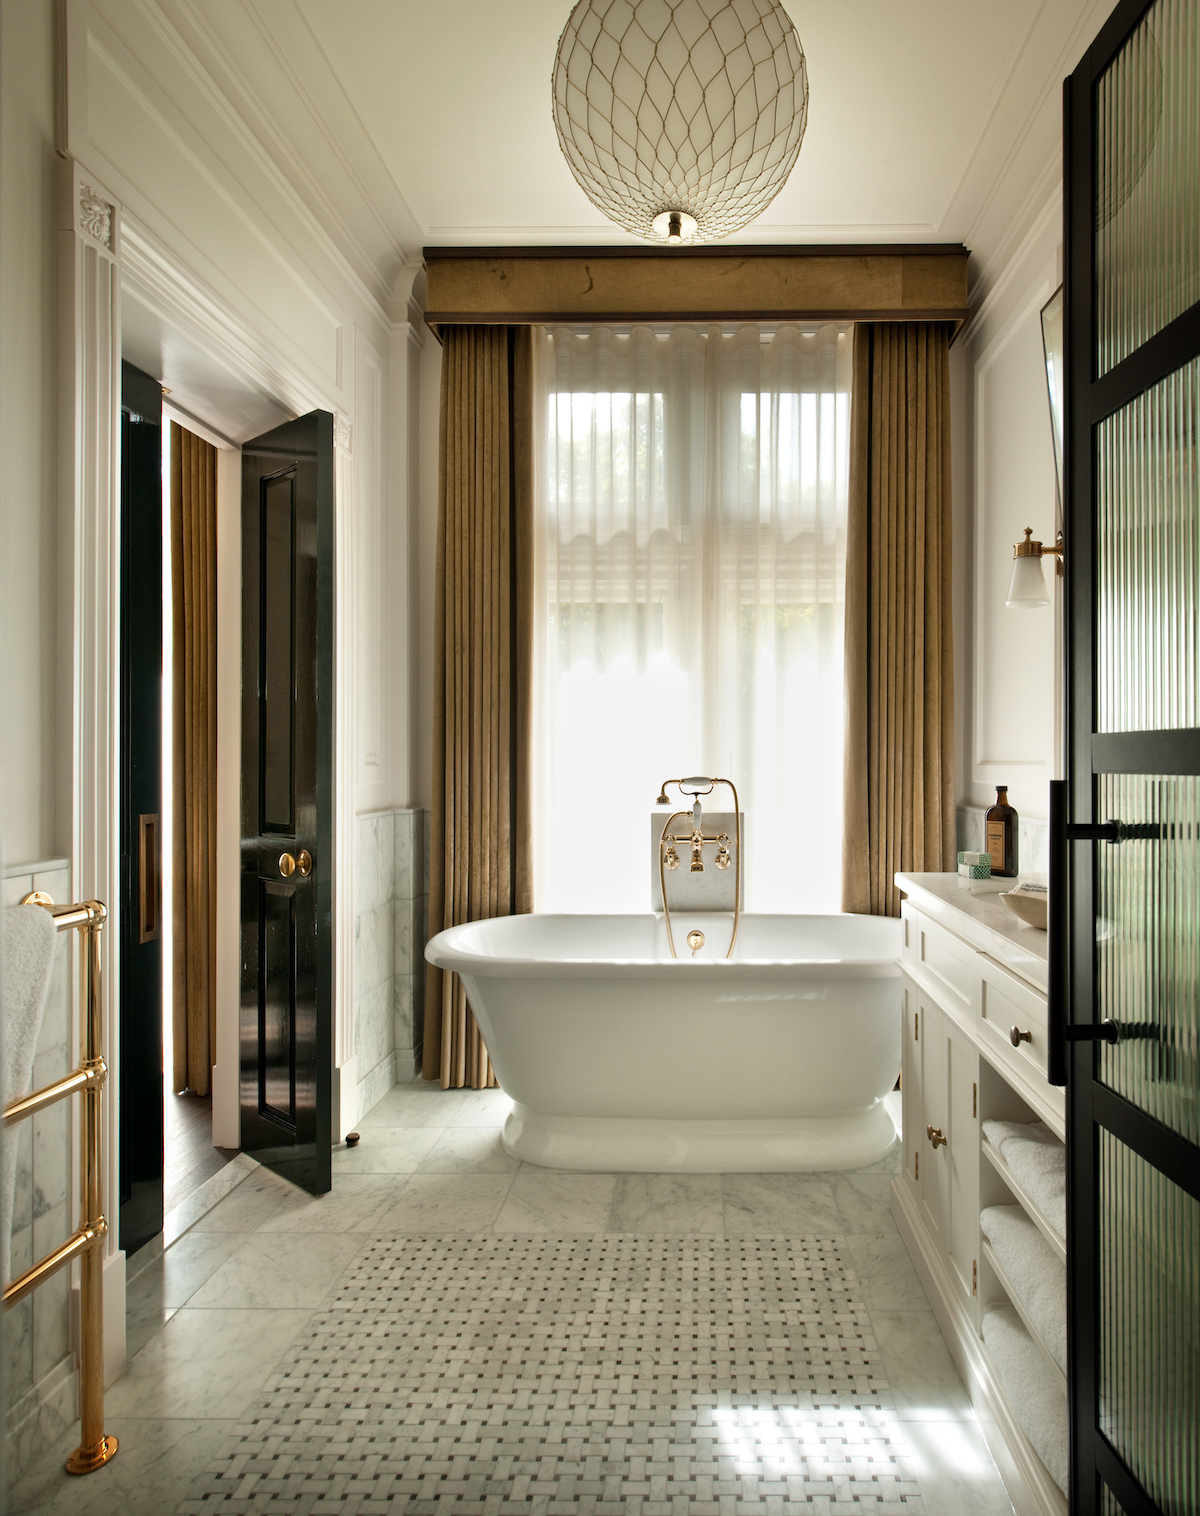 Image credit: Phillip Vile. Hotel – Kimpton Fitzroy, London, designed by Tara Bernerd & Partners